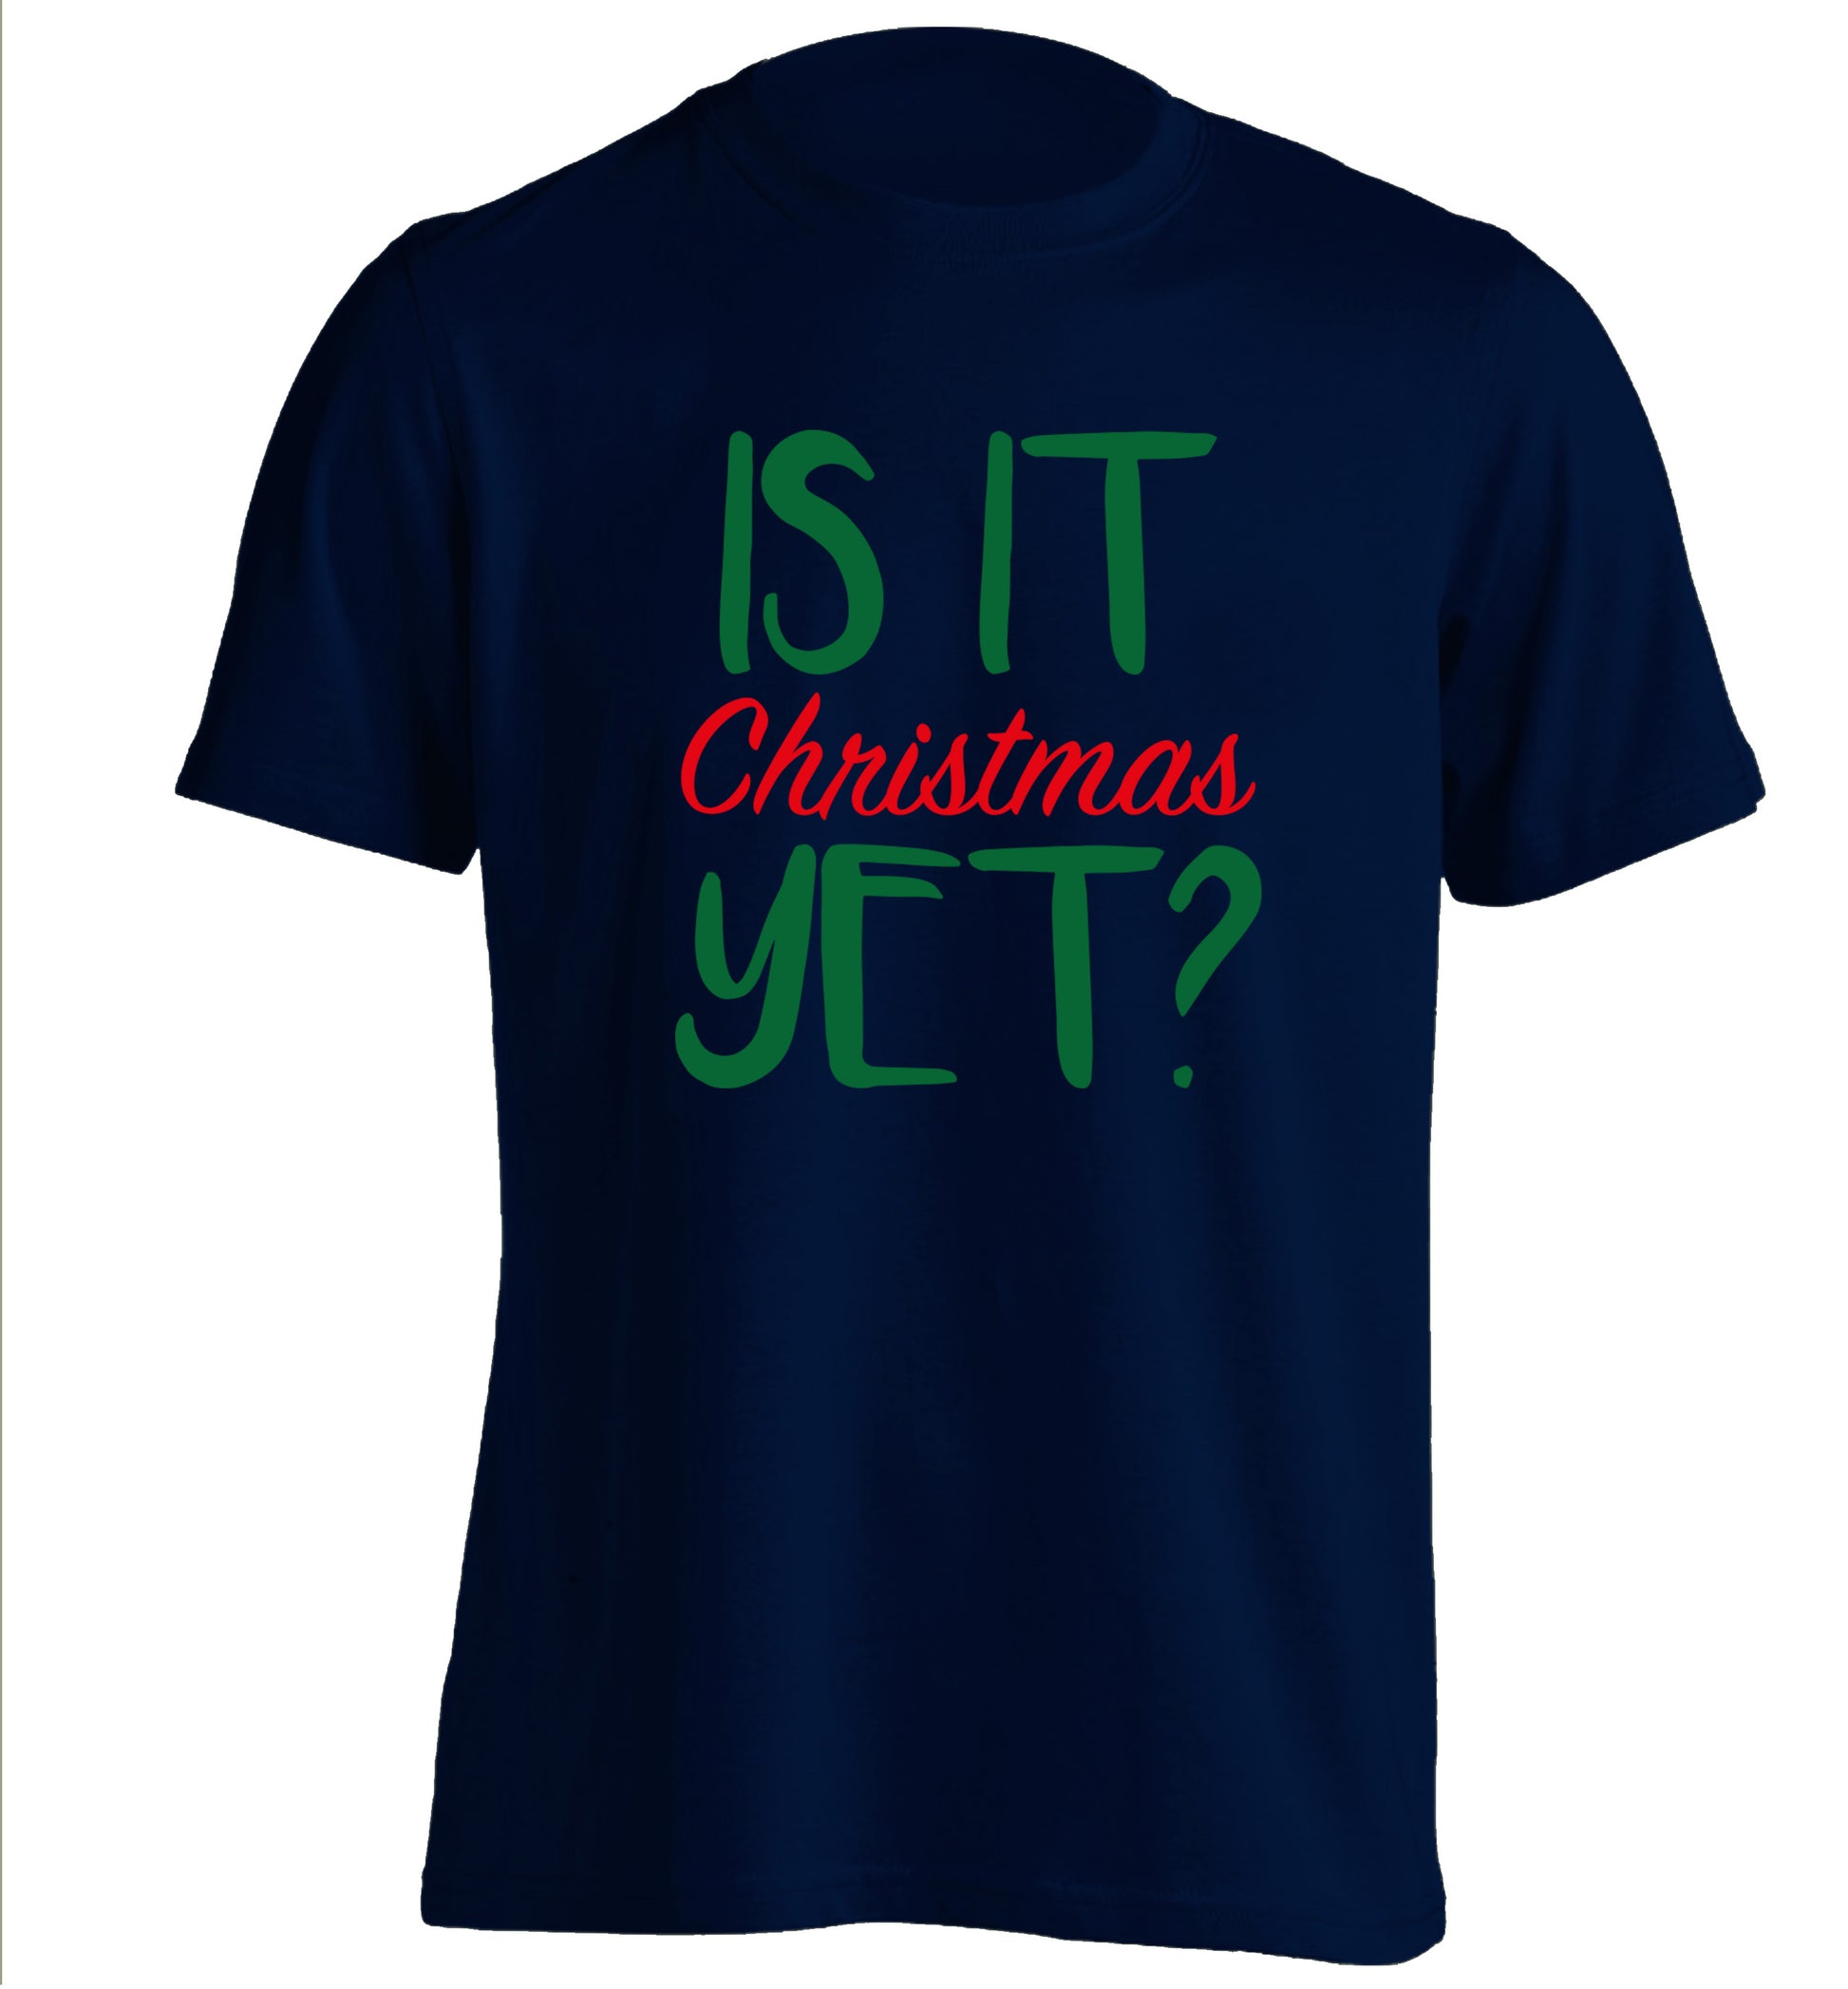 Is it Christmas yet? adults unisex navy Tshirt 2XL